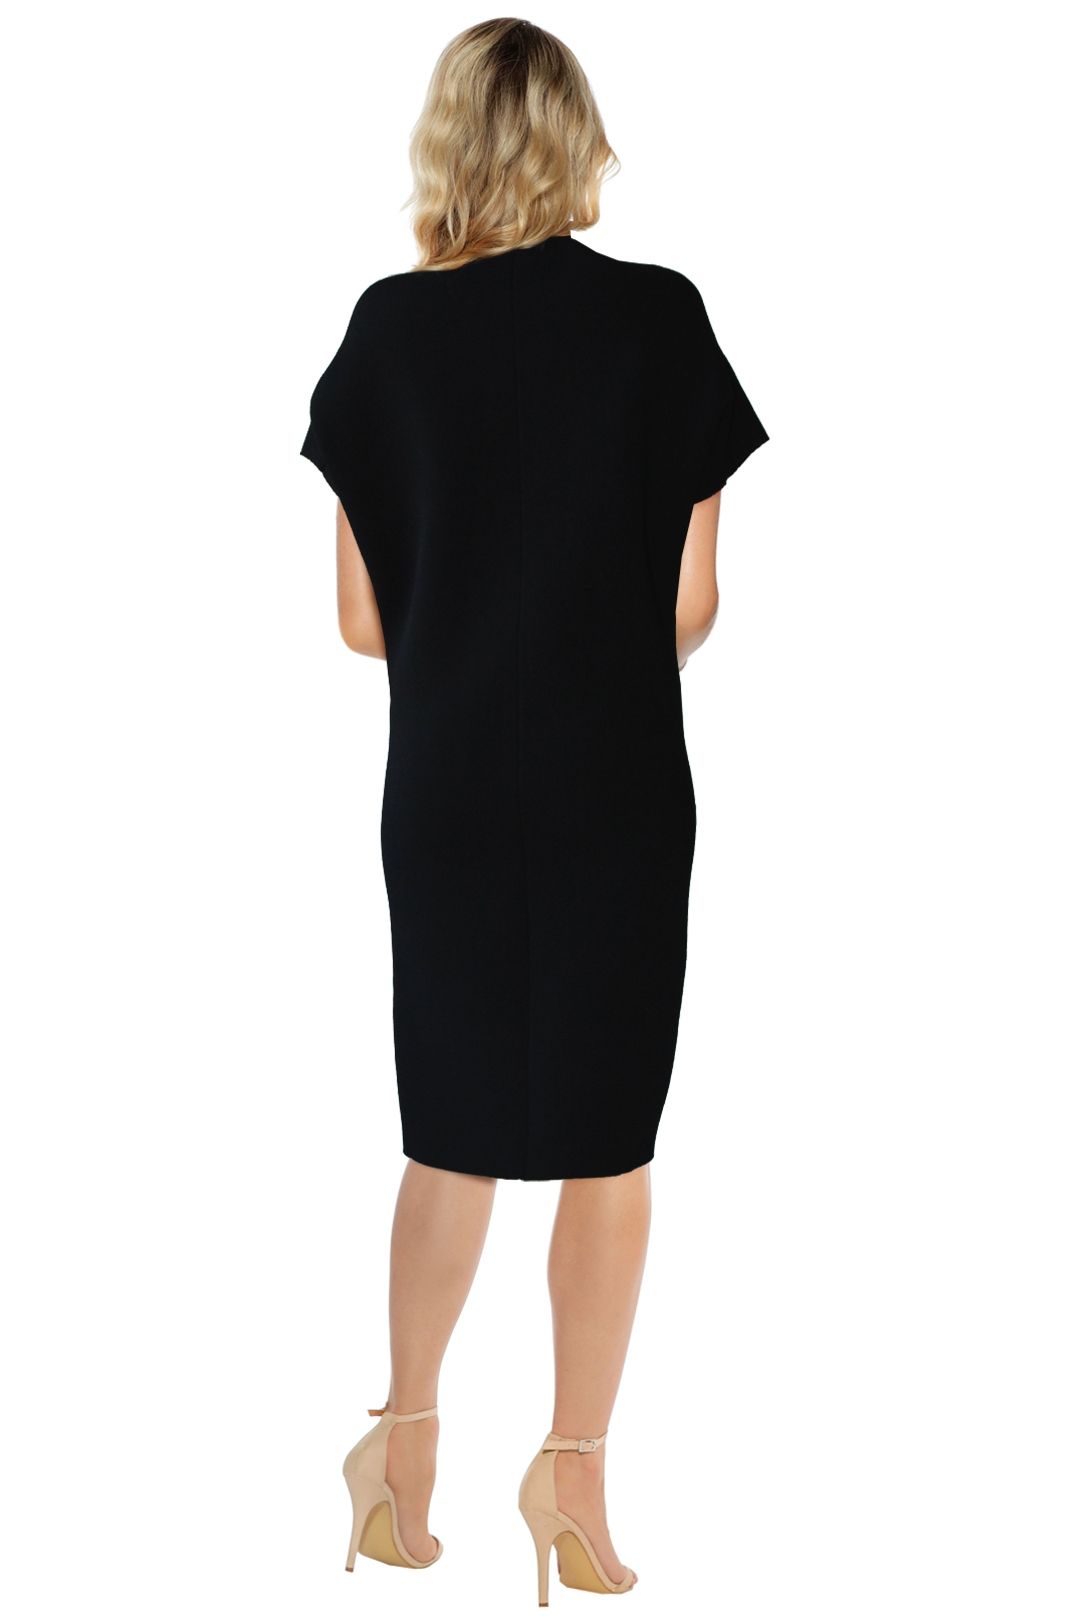 Scanlan Theodore - Black Crepe Knit Cocoon Dress - Black - Back